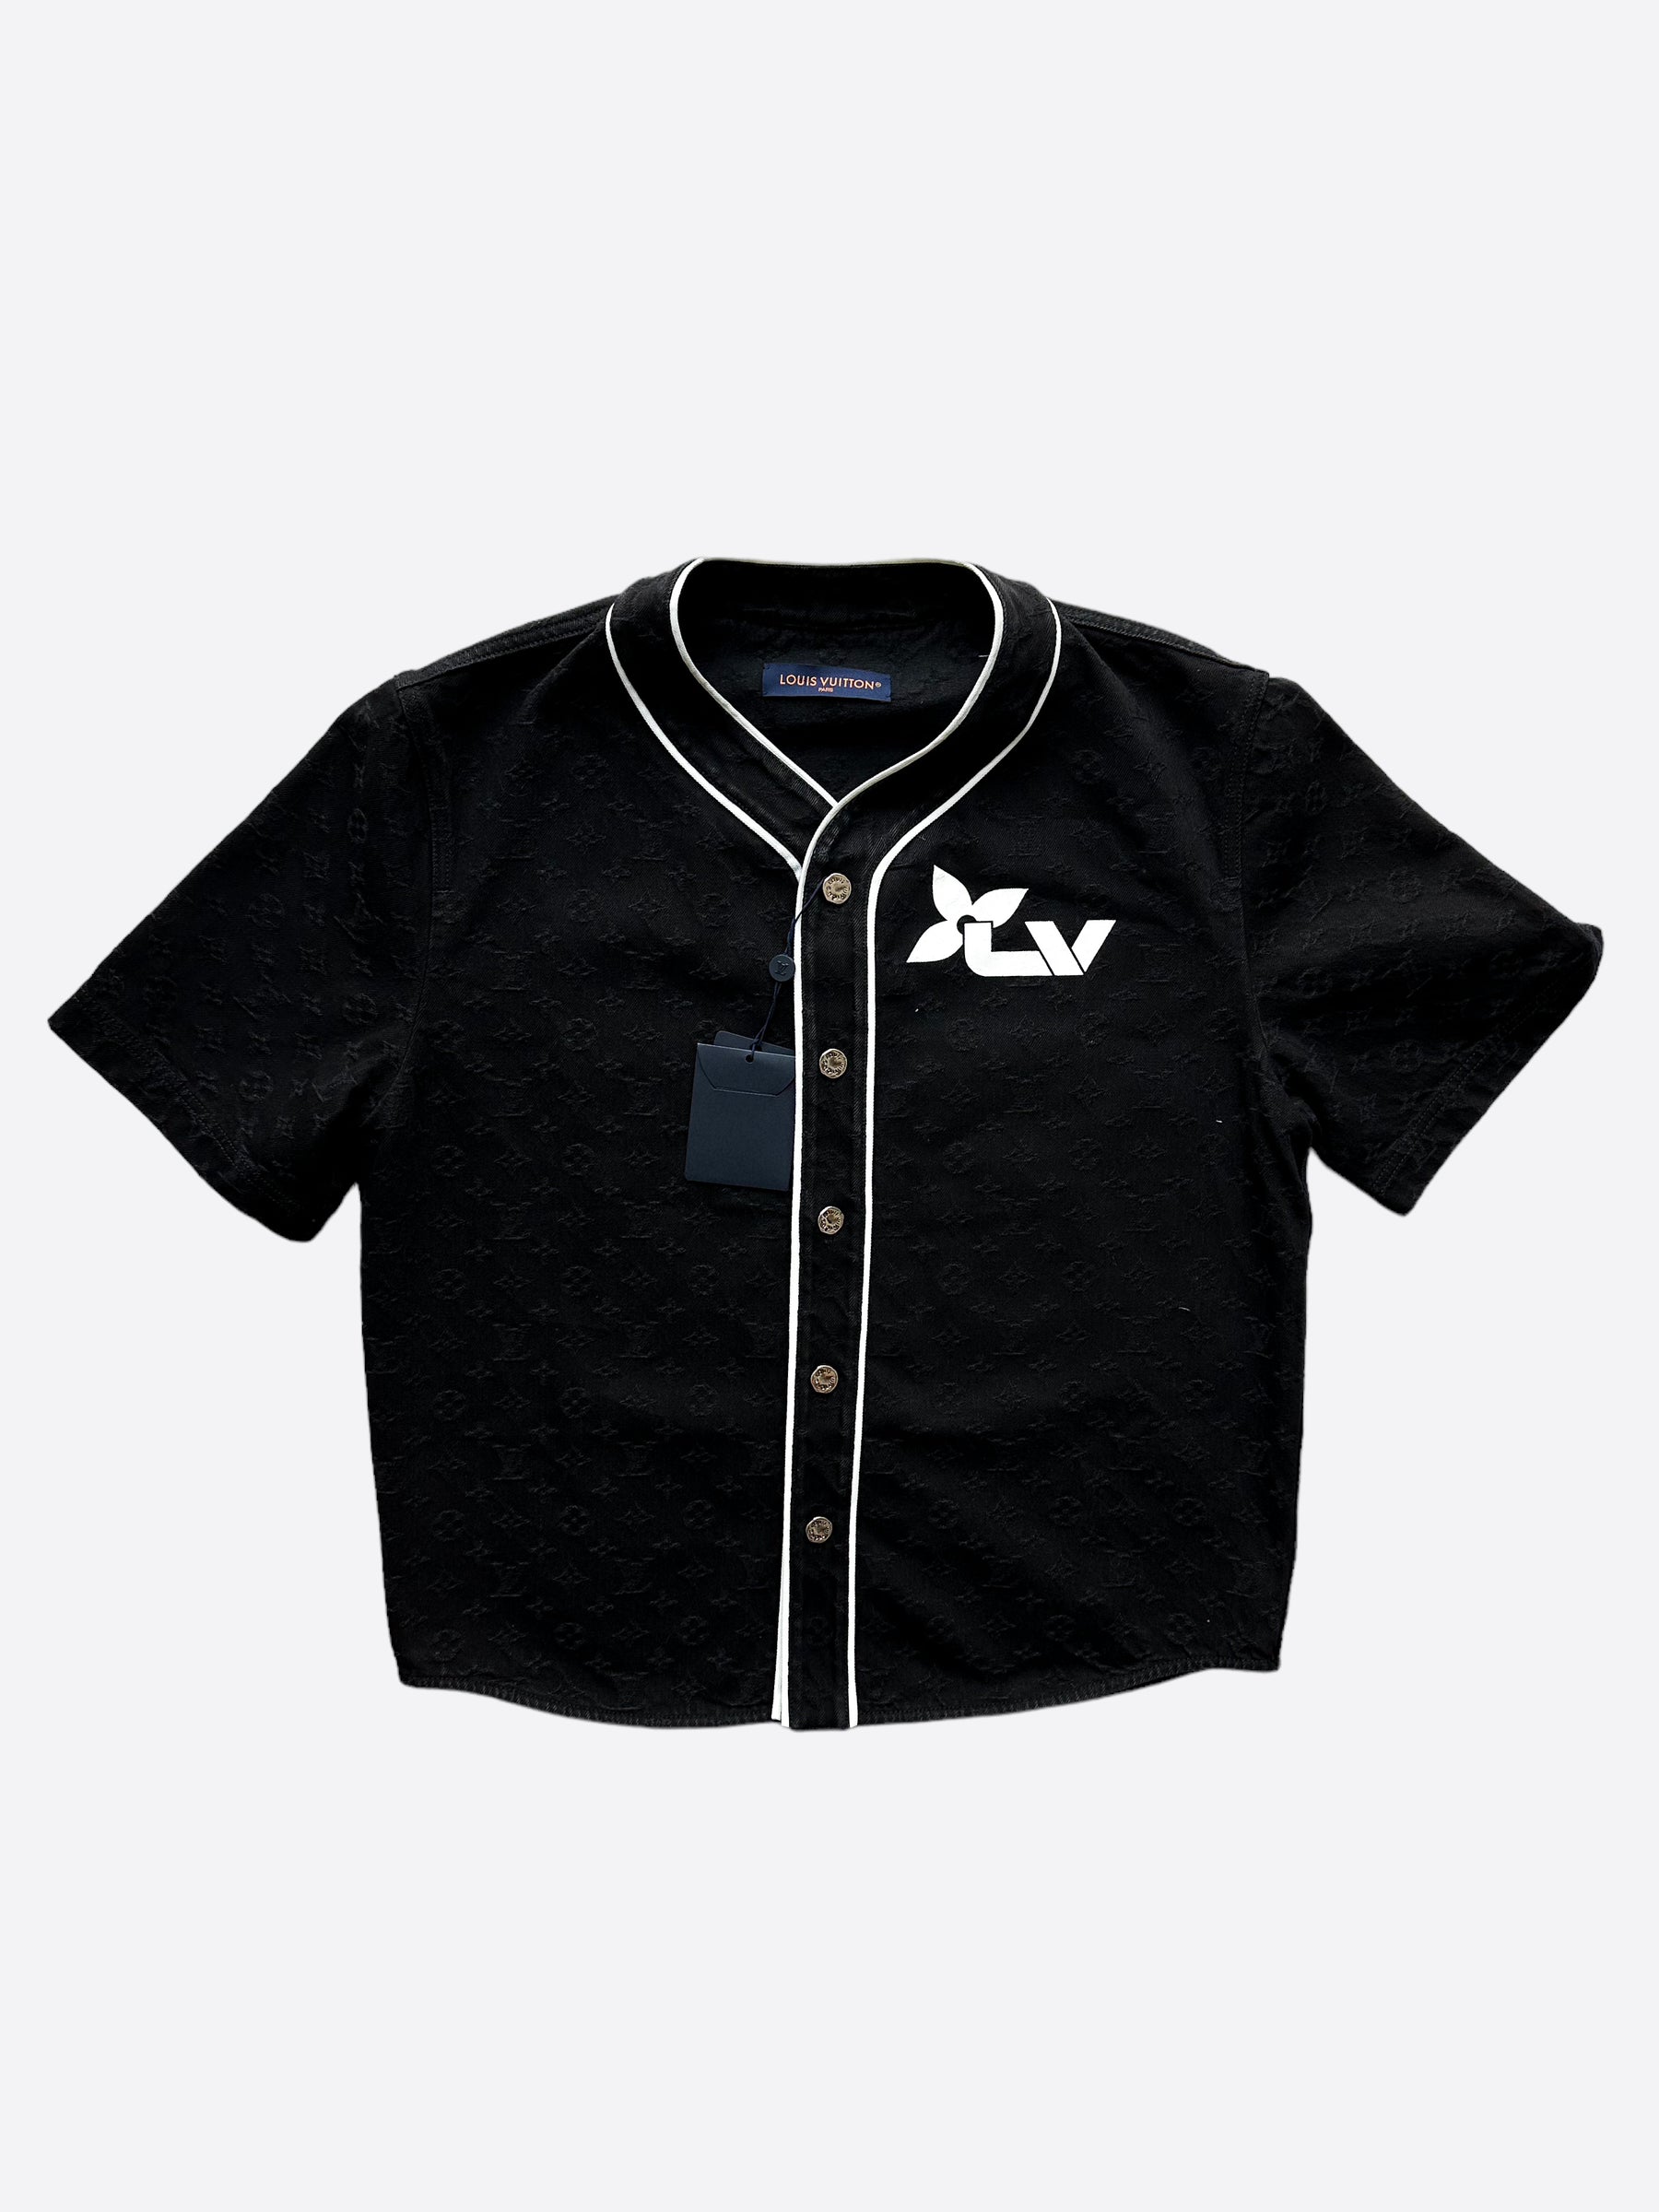 Louis vuitton black baseball jersey shirt lv luxury clothing clothes sport  for men women 121 bjhg